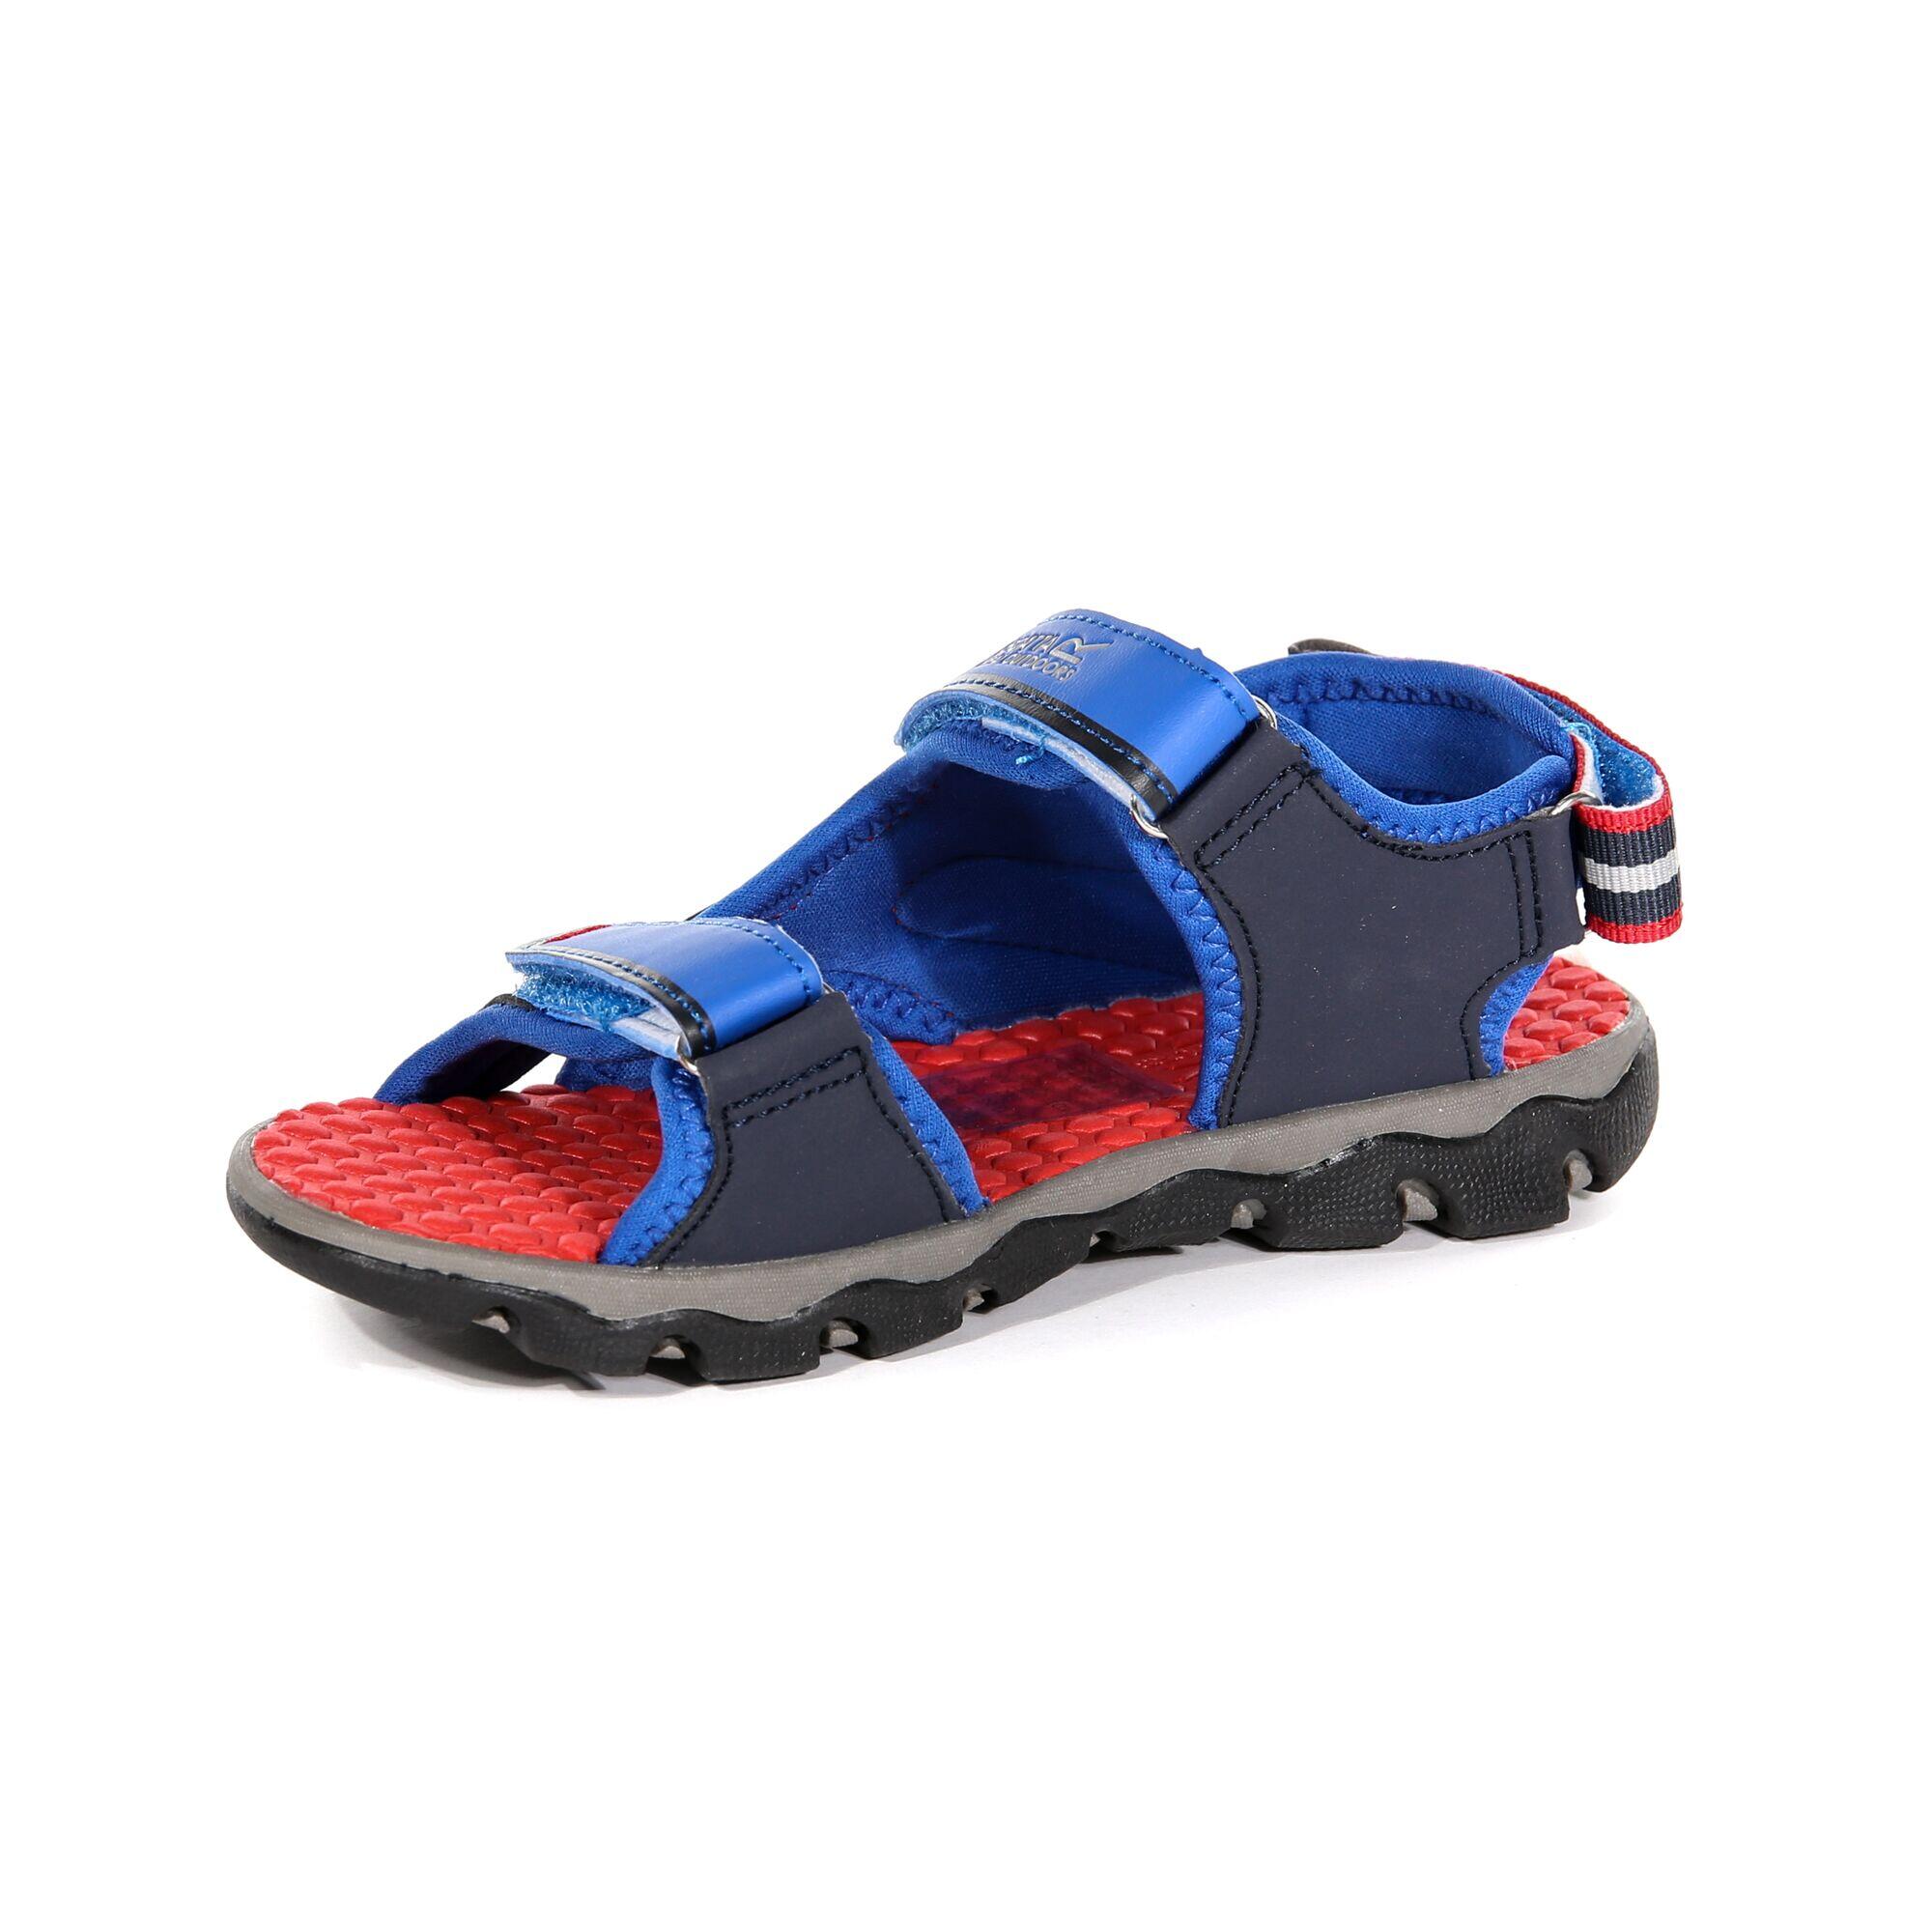 Kota Drift Junior Kids Walking Sandals - Oxford Blue Pepper 4/7